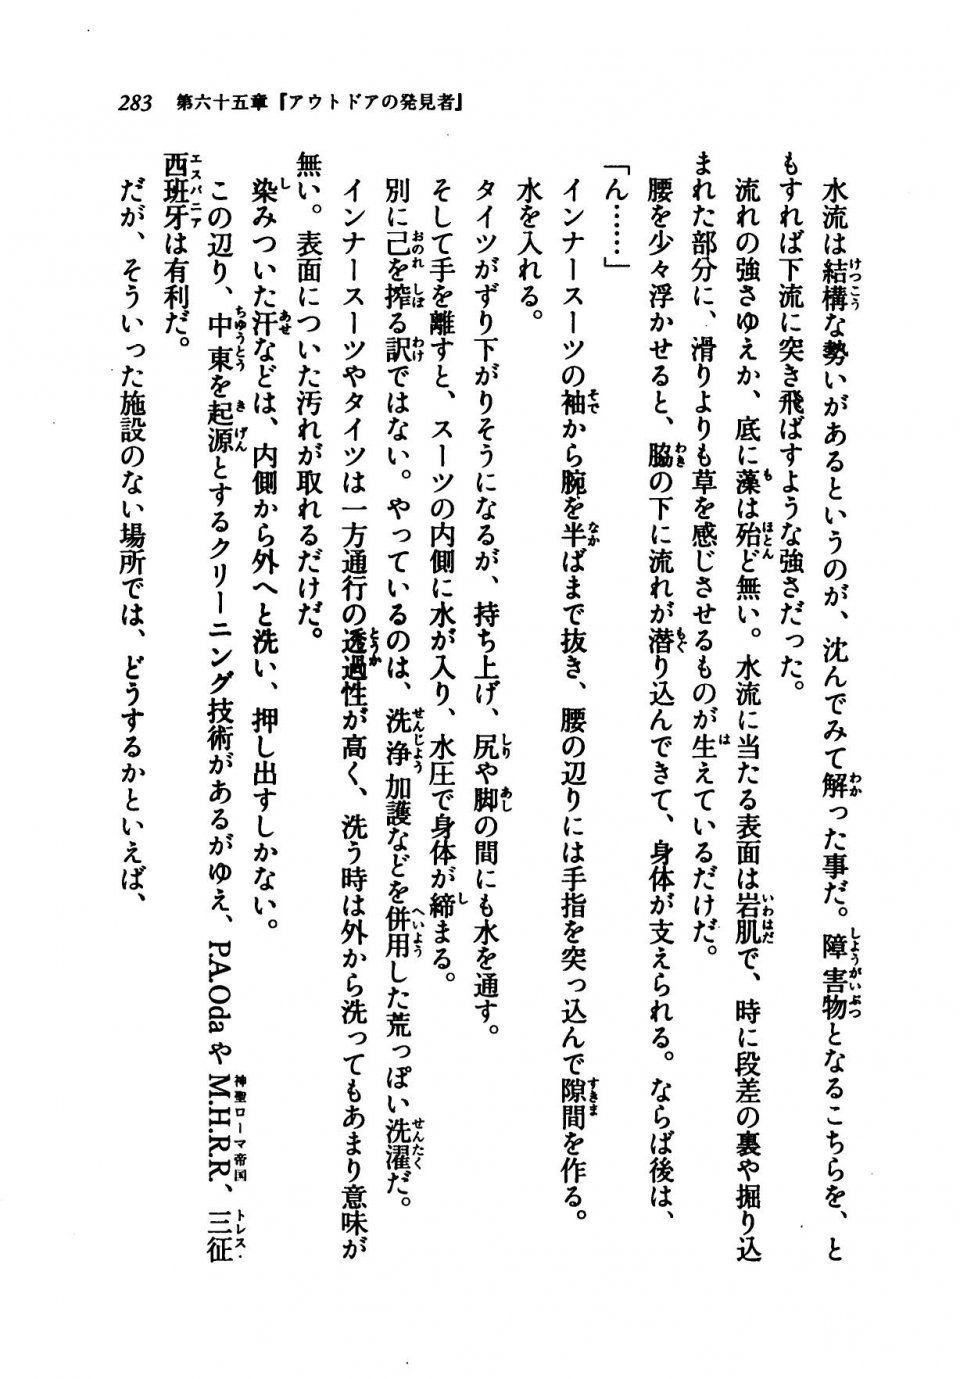 Kyoukai Senjou no Horizon LN Vol 21(8C) Part 1 - Photo #282